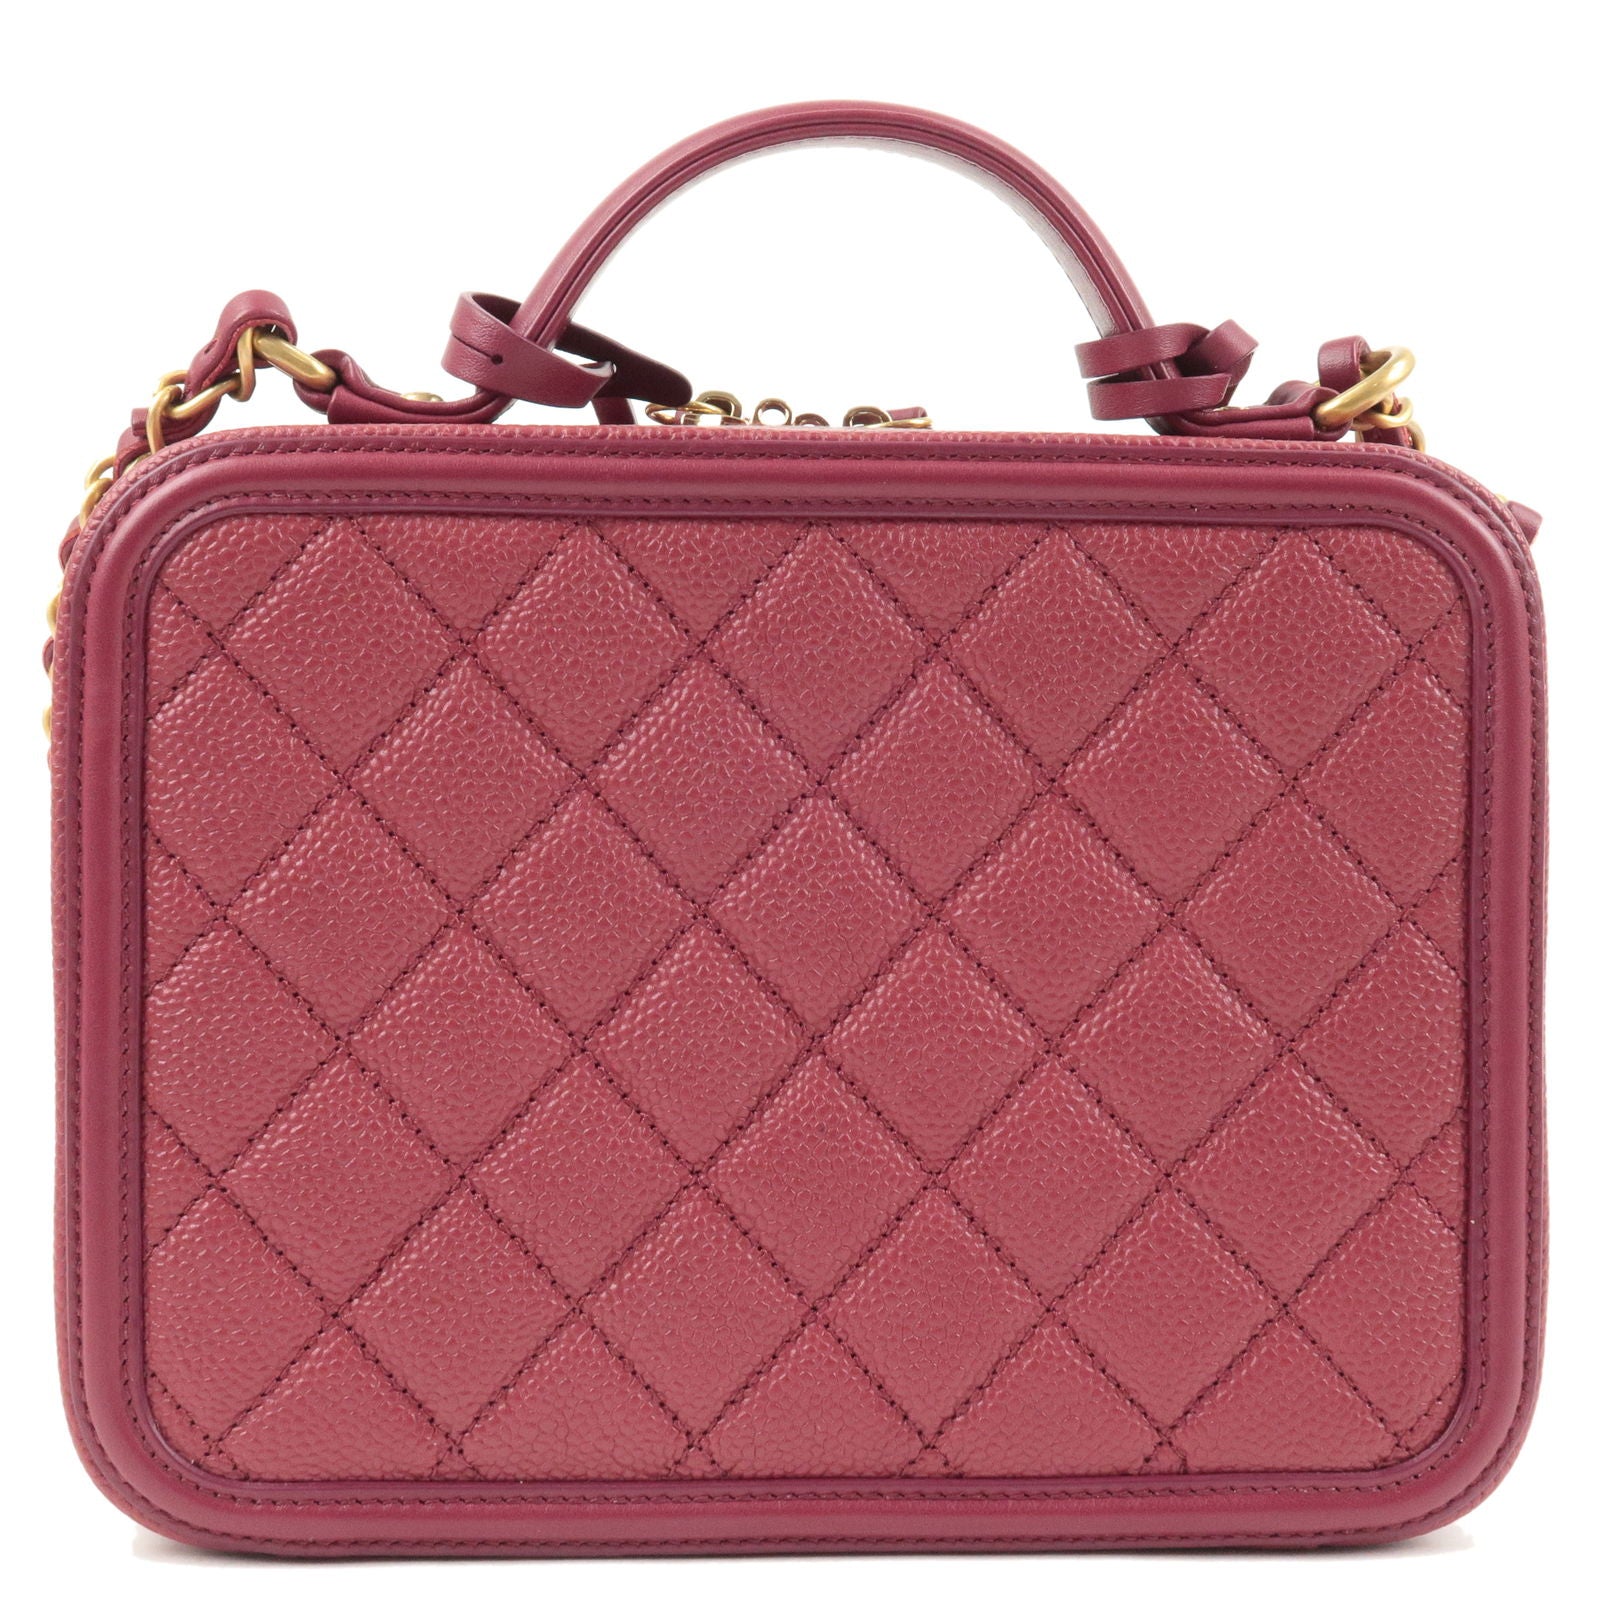 red chanel vanity case handbag